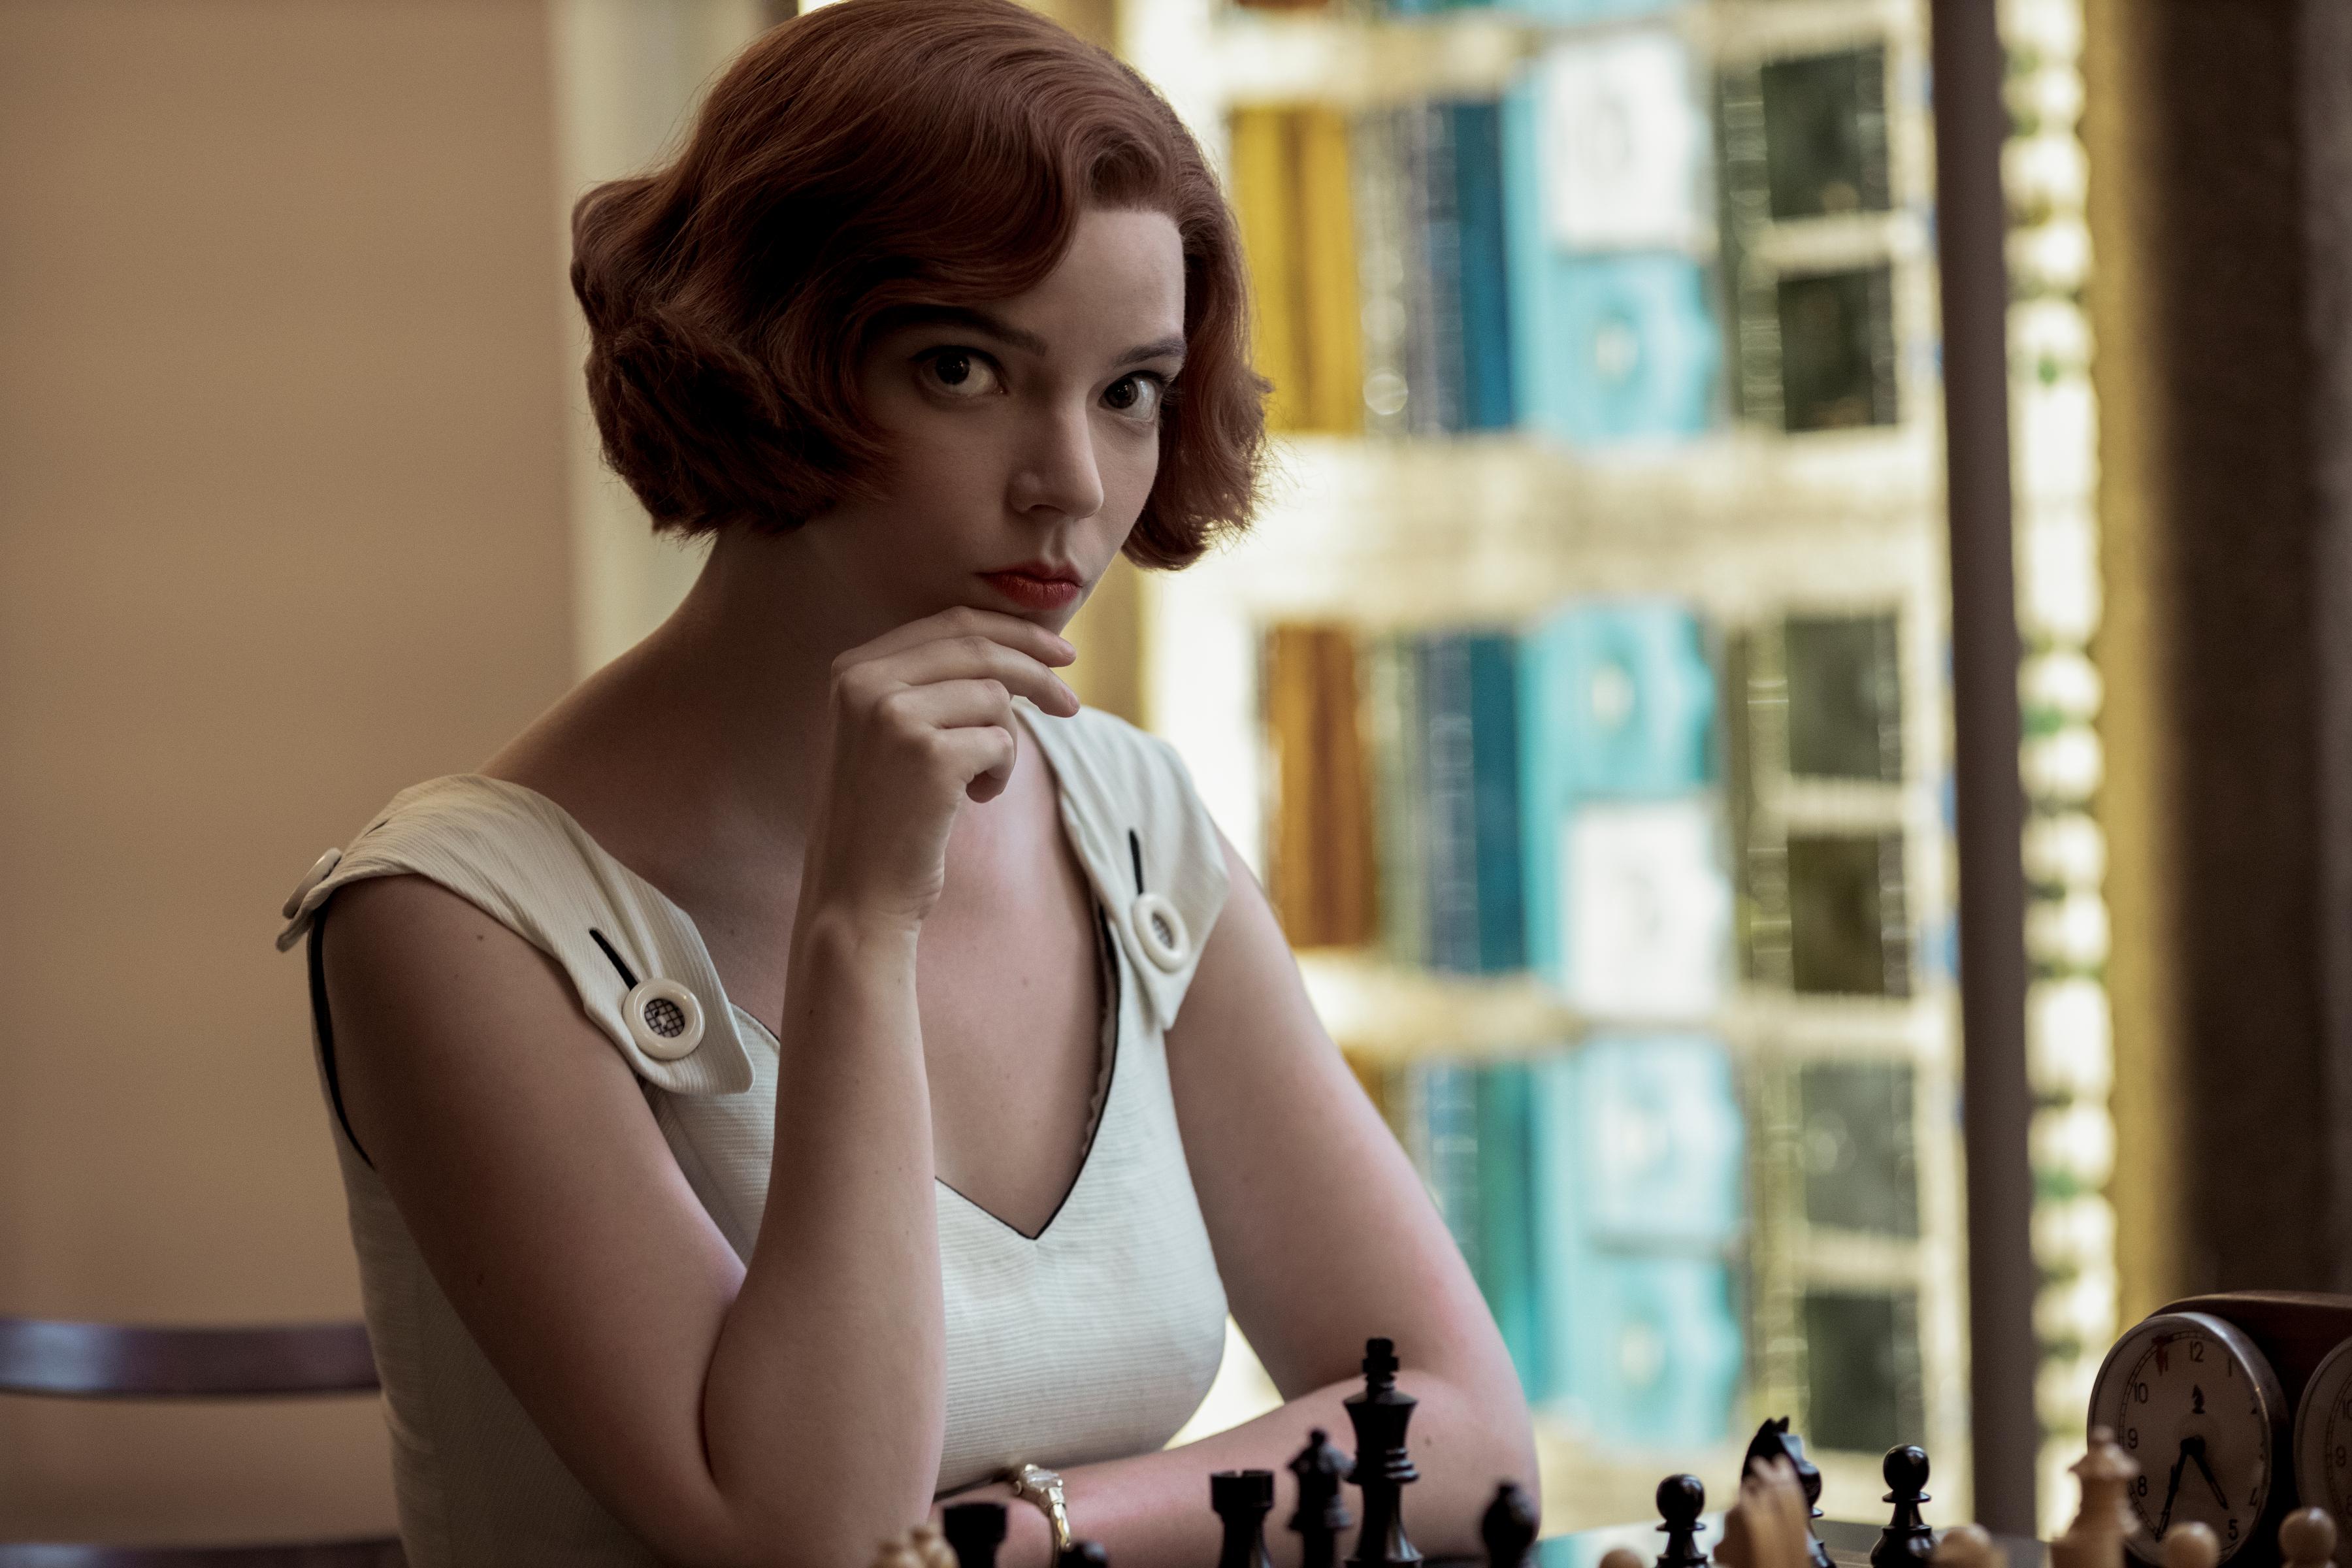 Lenda soviética do xadrez processa Netflix pela série 'O Gambito